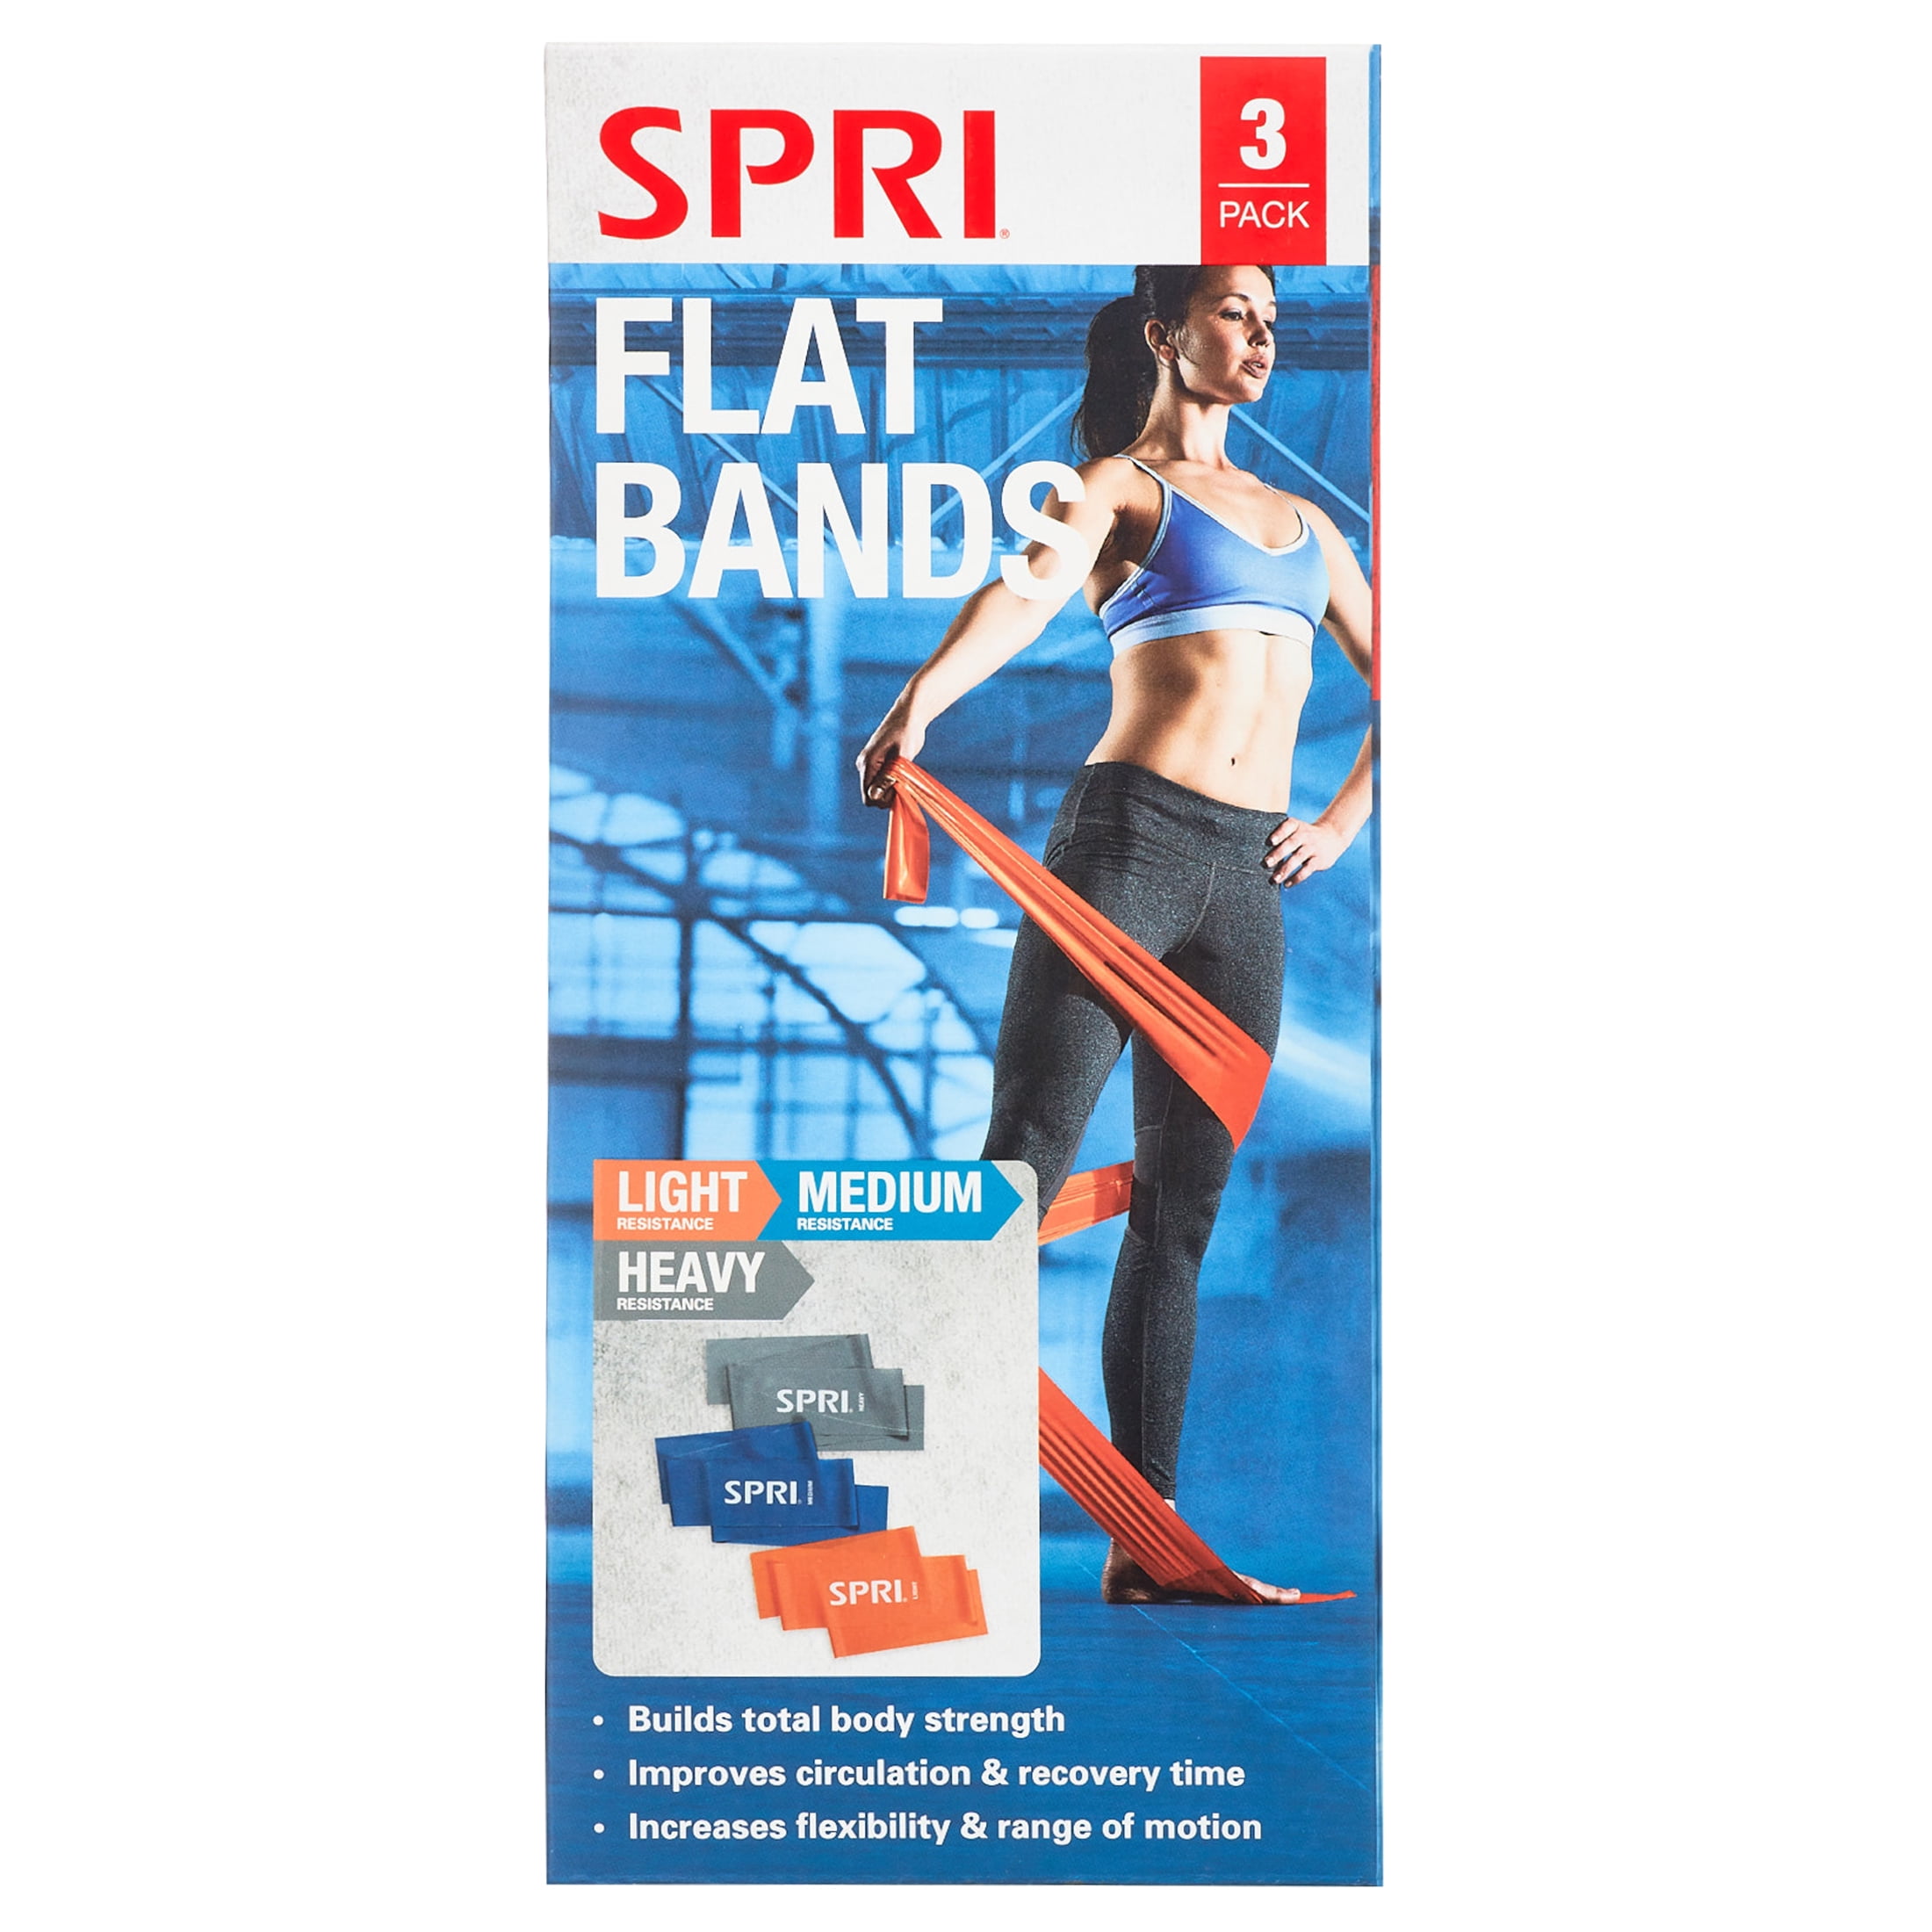 SPRI Flat Bands, Resistance Stretch Band Kit, 3 Pack (Light